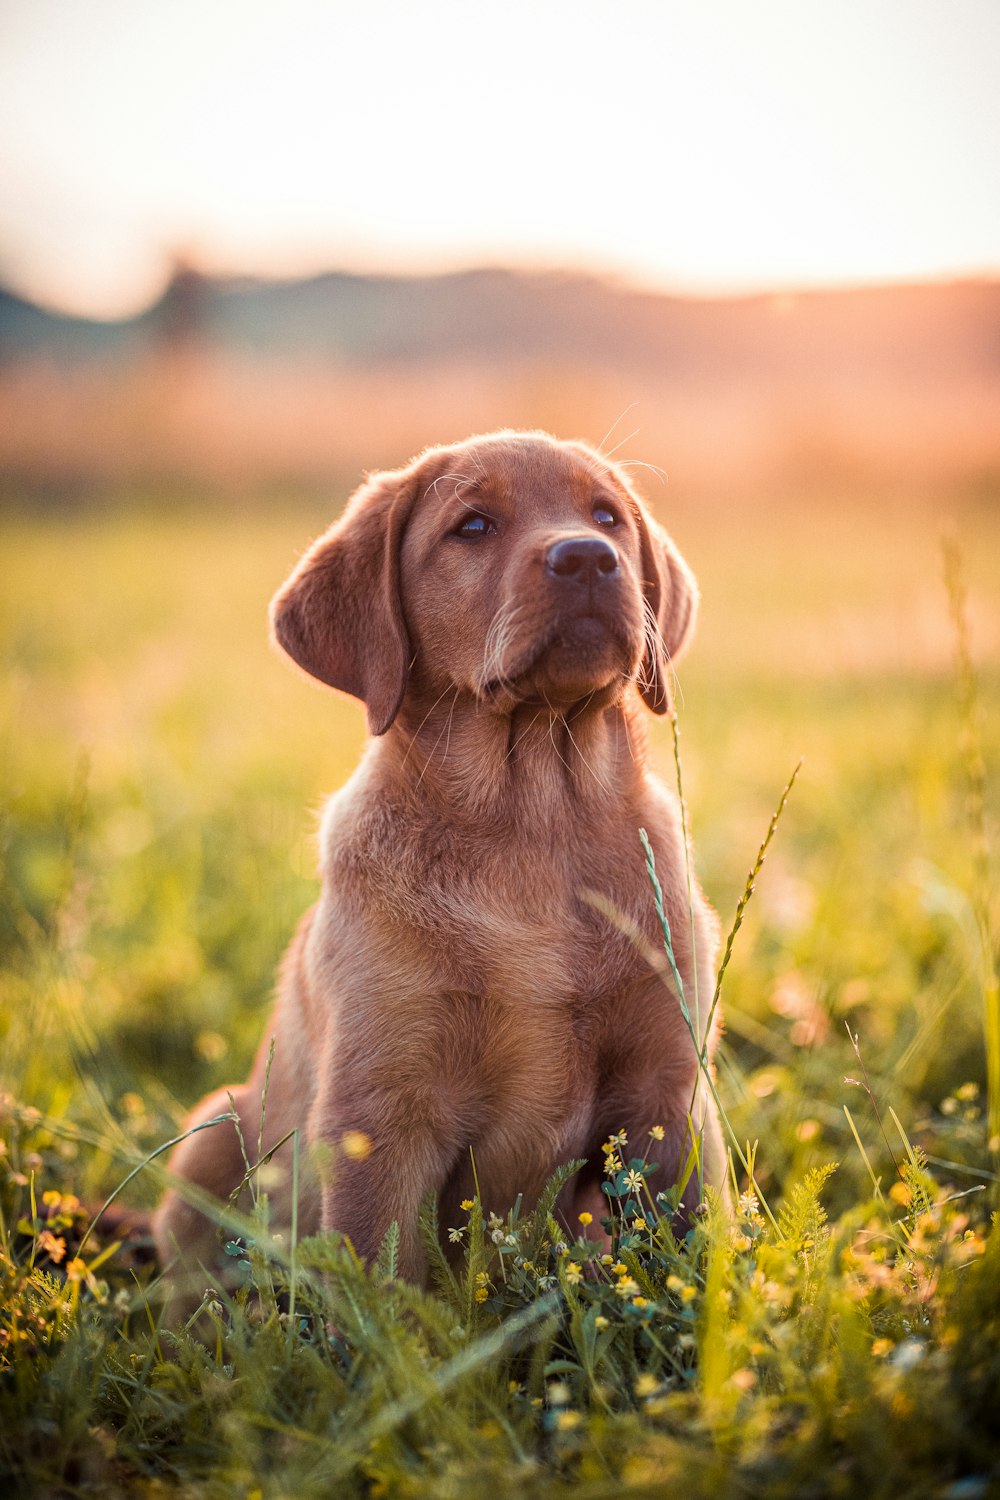 a brown dog sitting in a grassy field